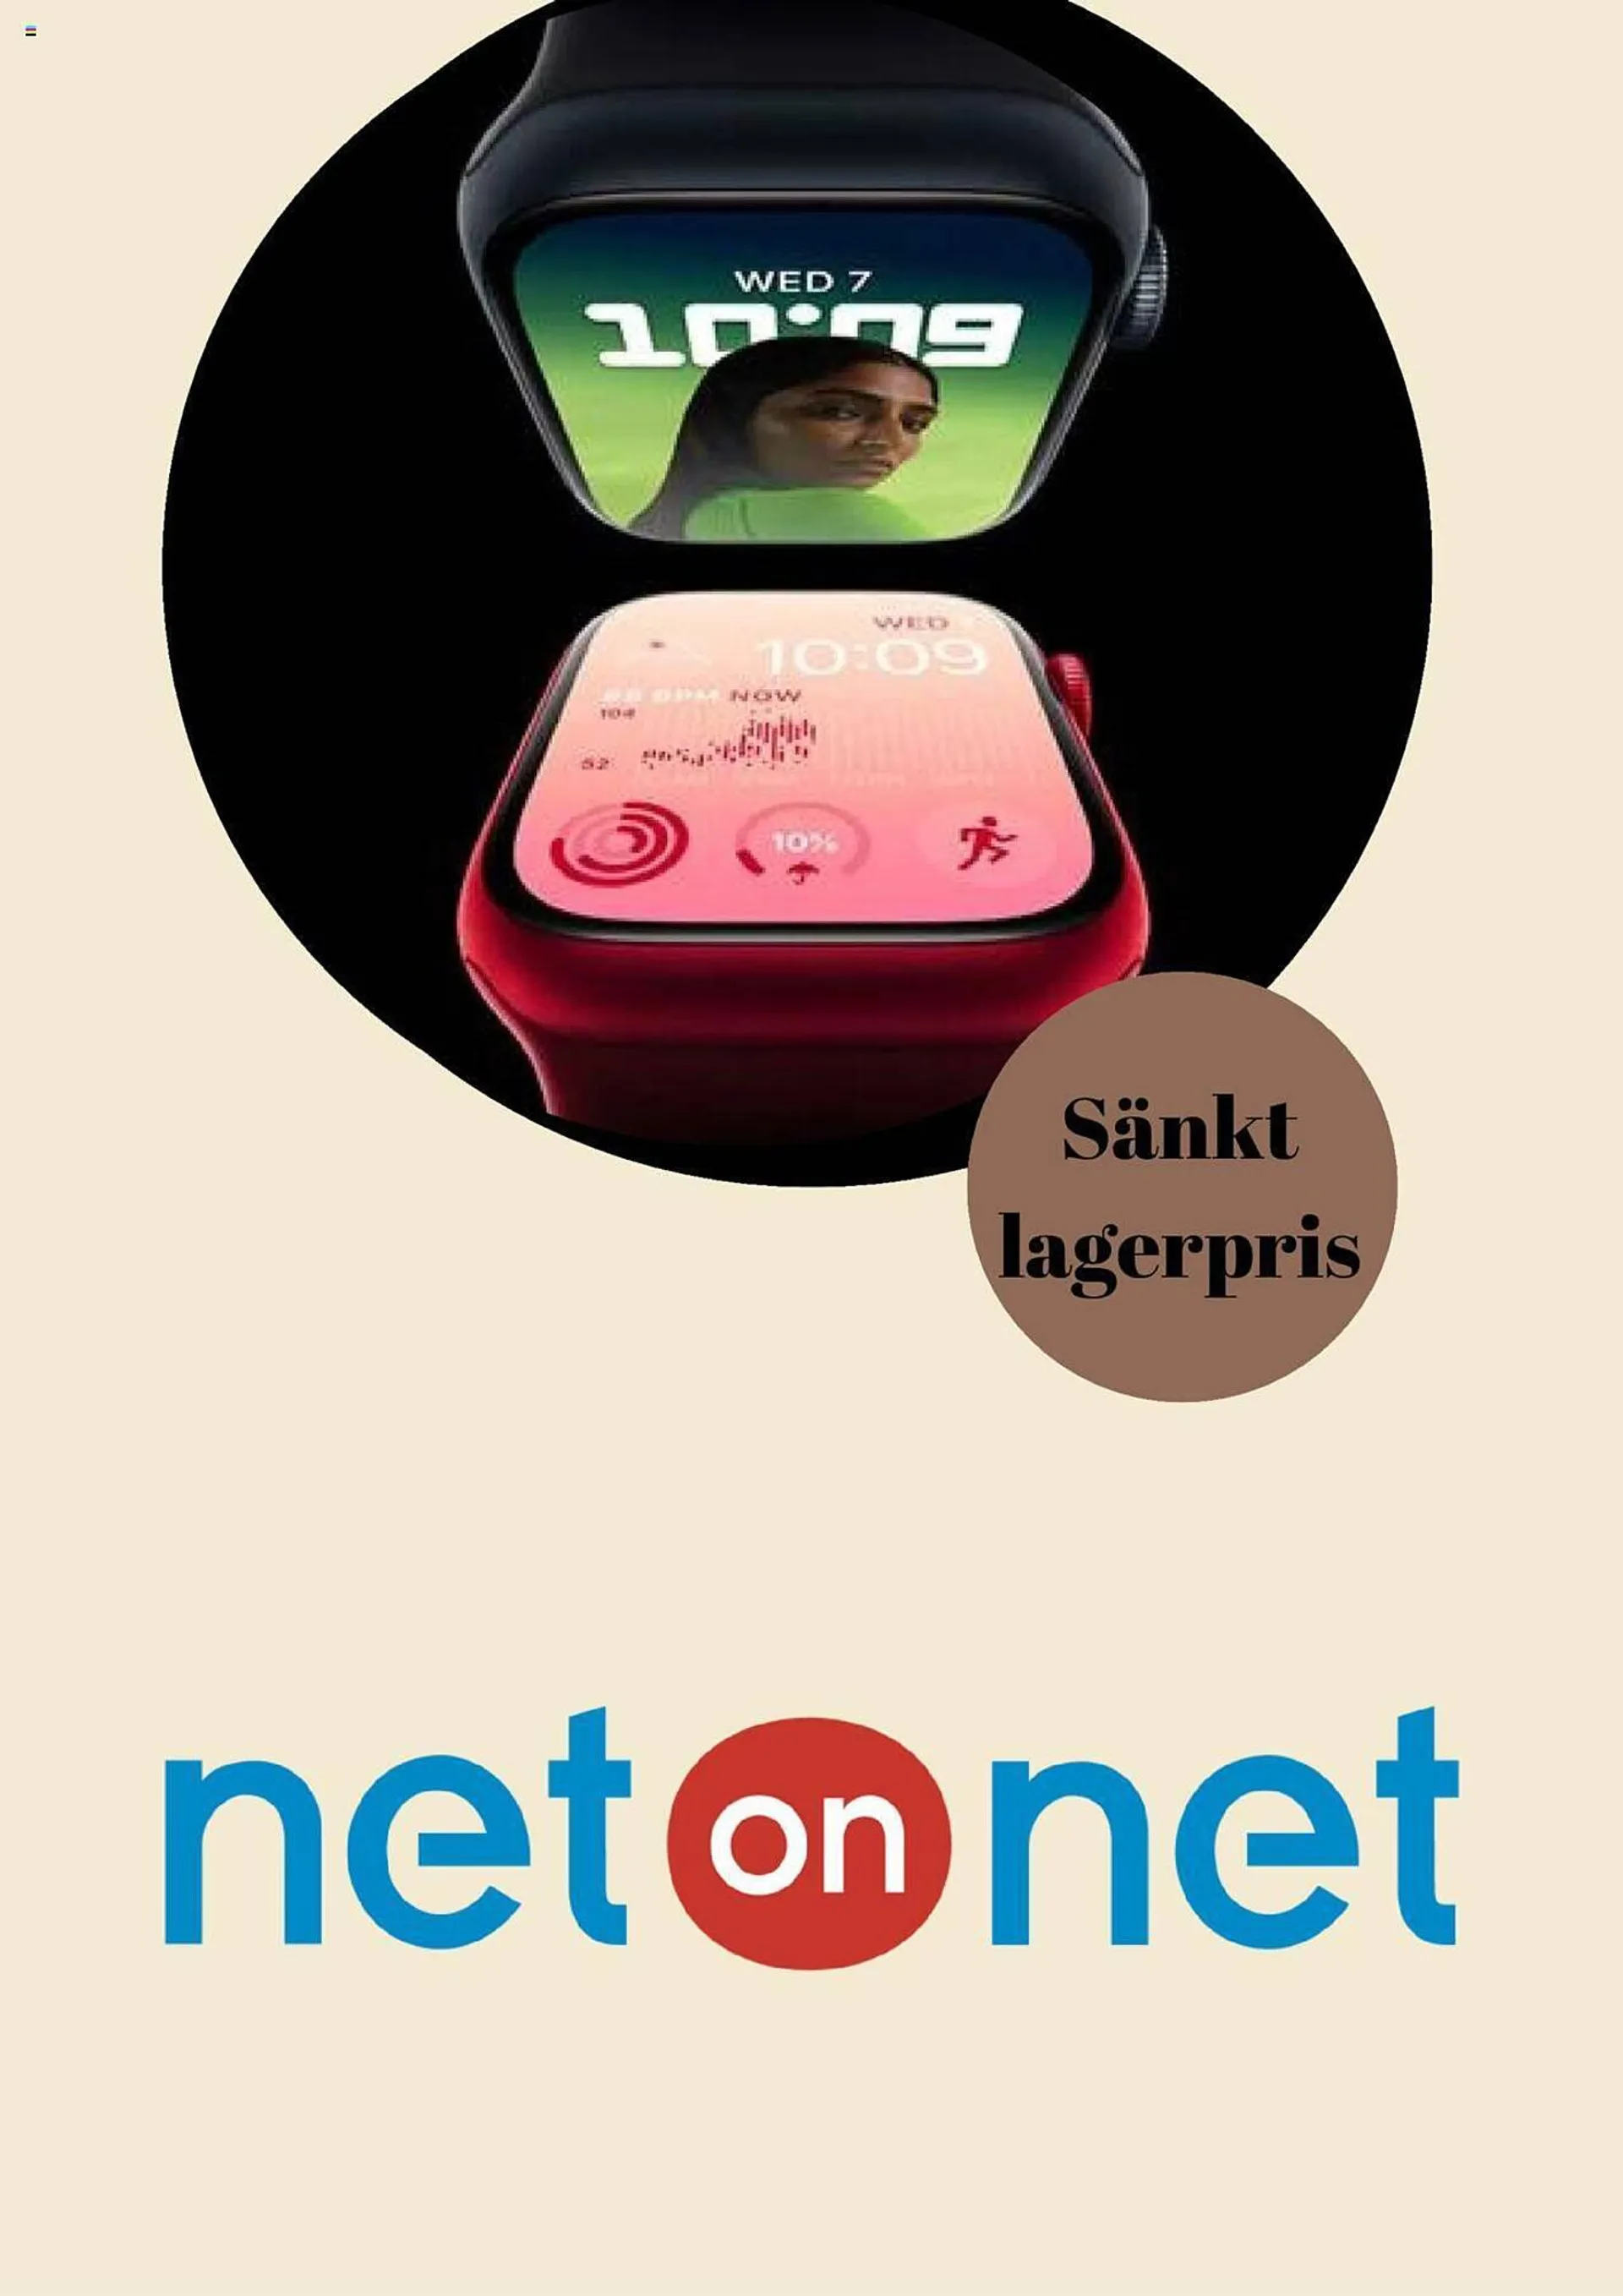 NetOnNet reklamblad - 1